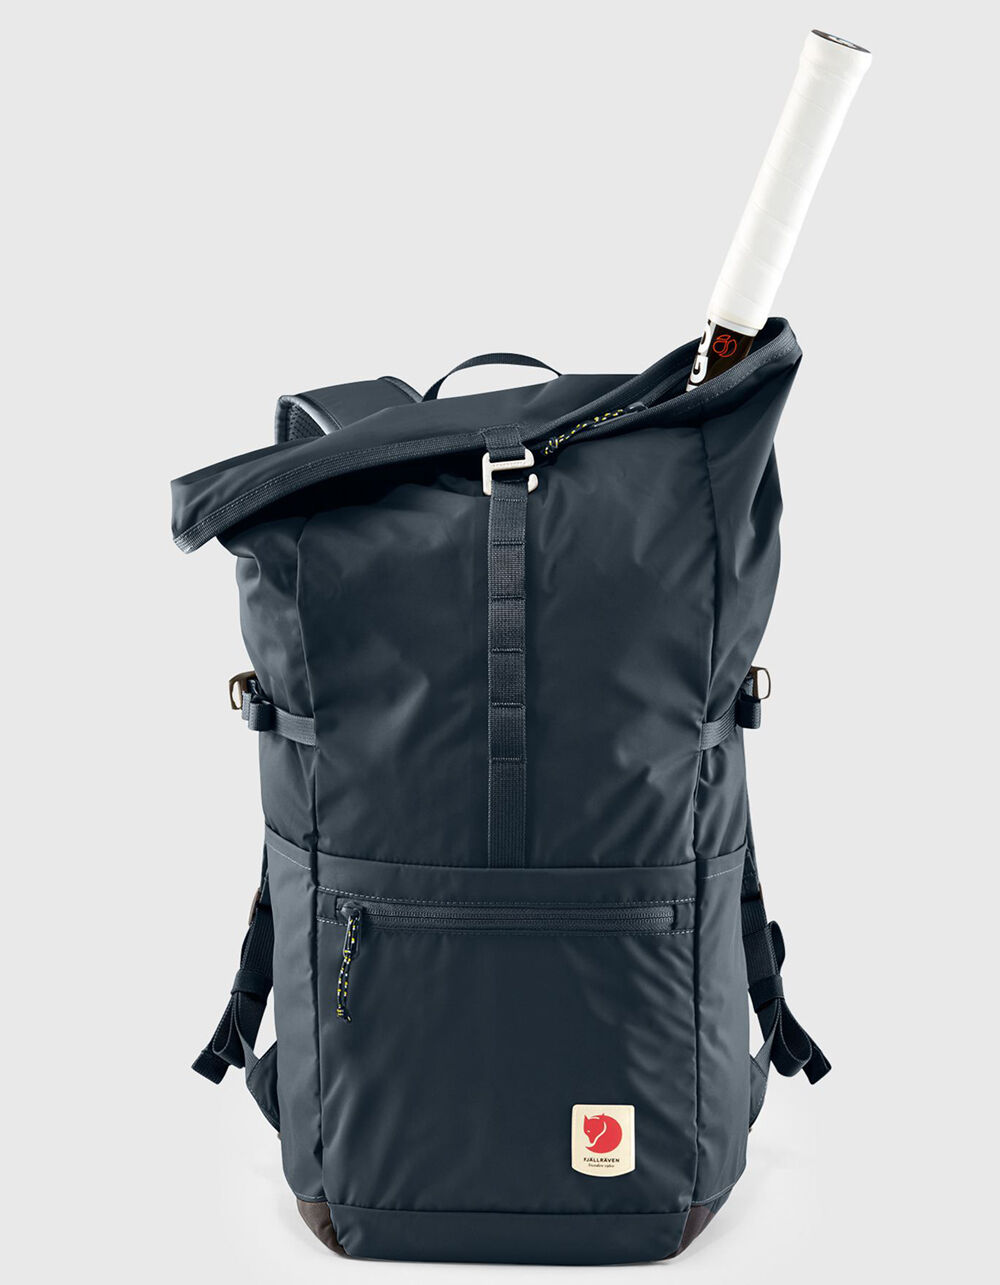 FJALLRAVEN High Coast Foldsack 24 Backpack - NAVY |